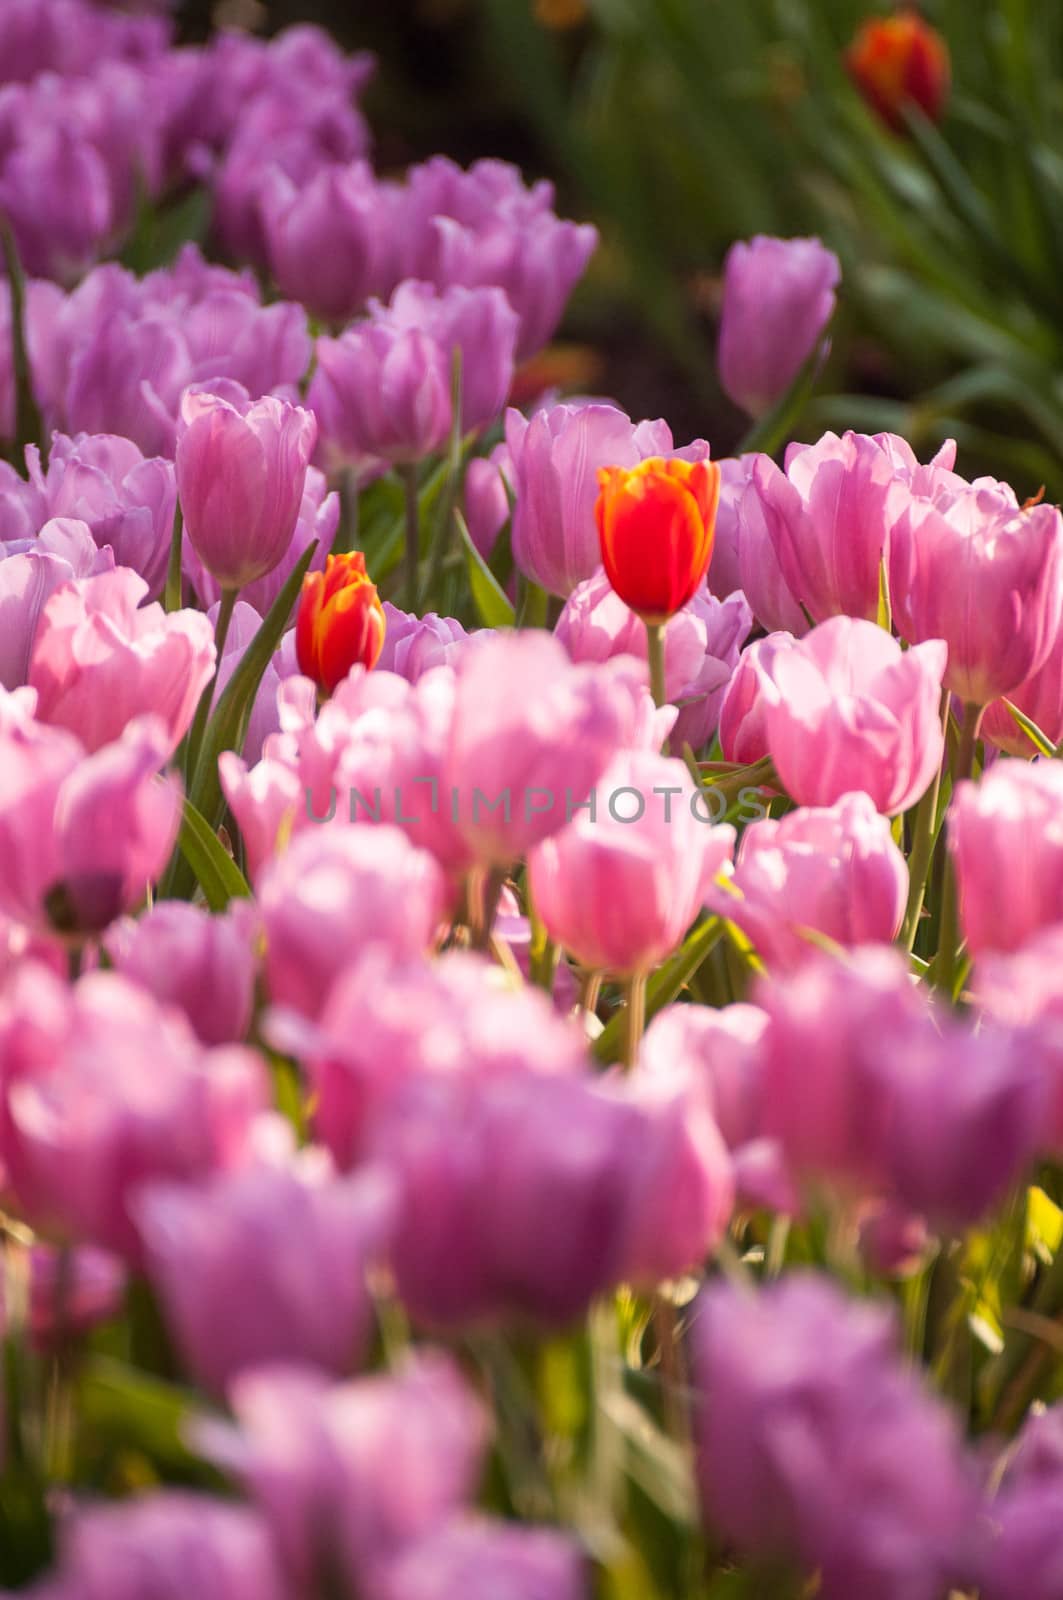 fresh tulips in garden by Yuri2012